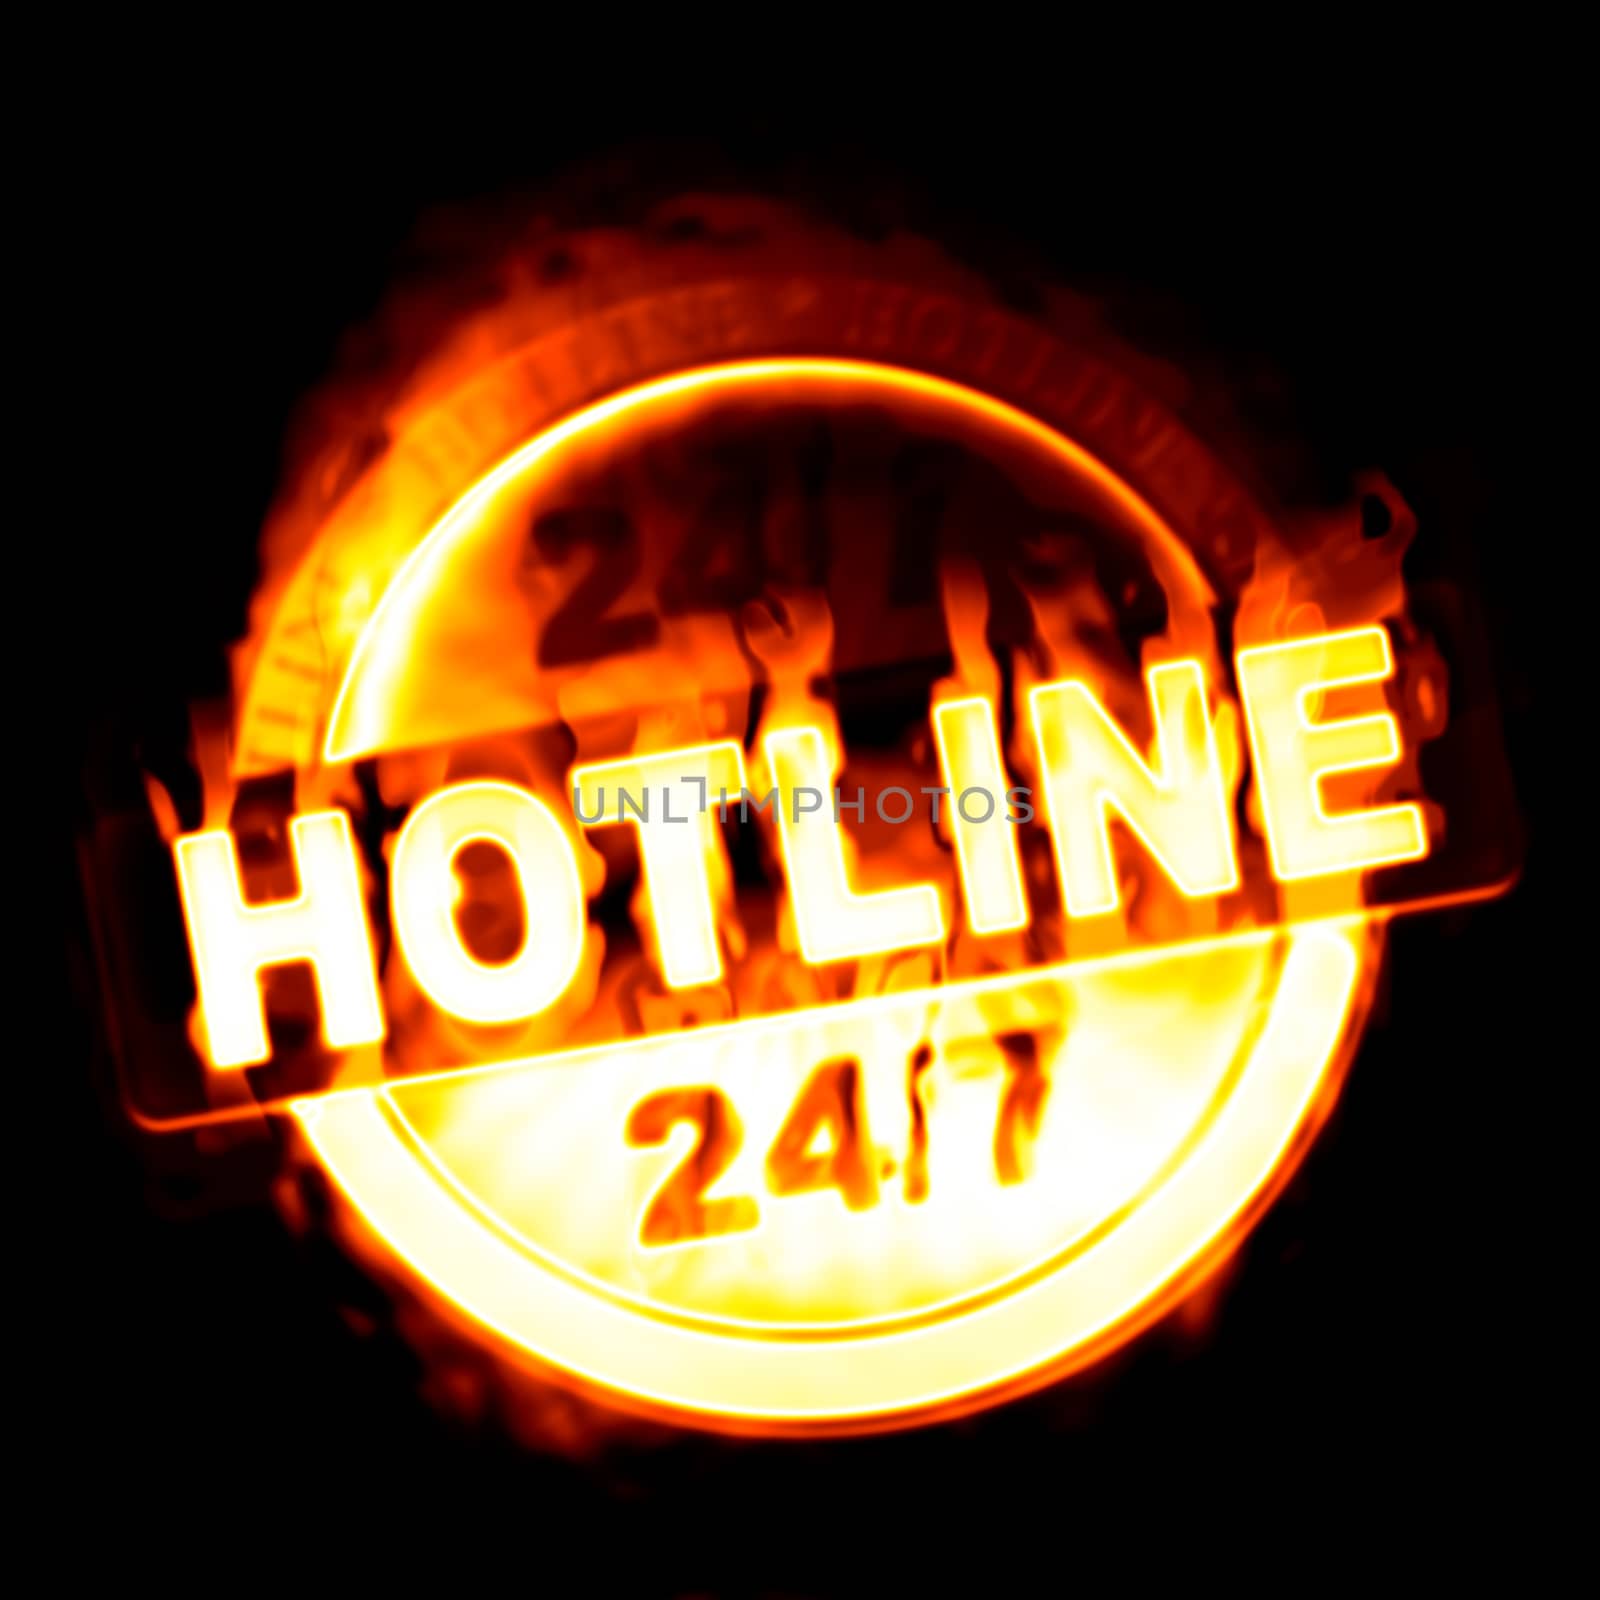 hotline on fire by magann